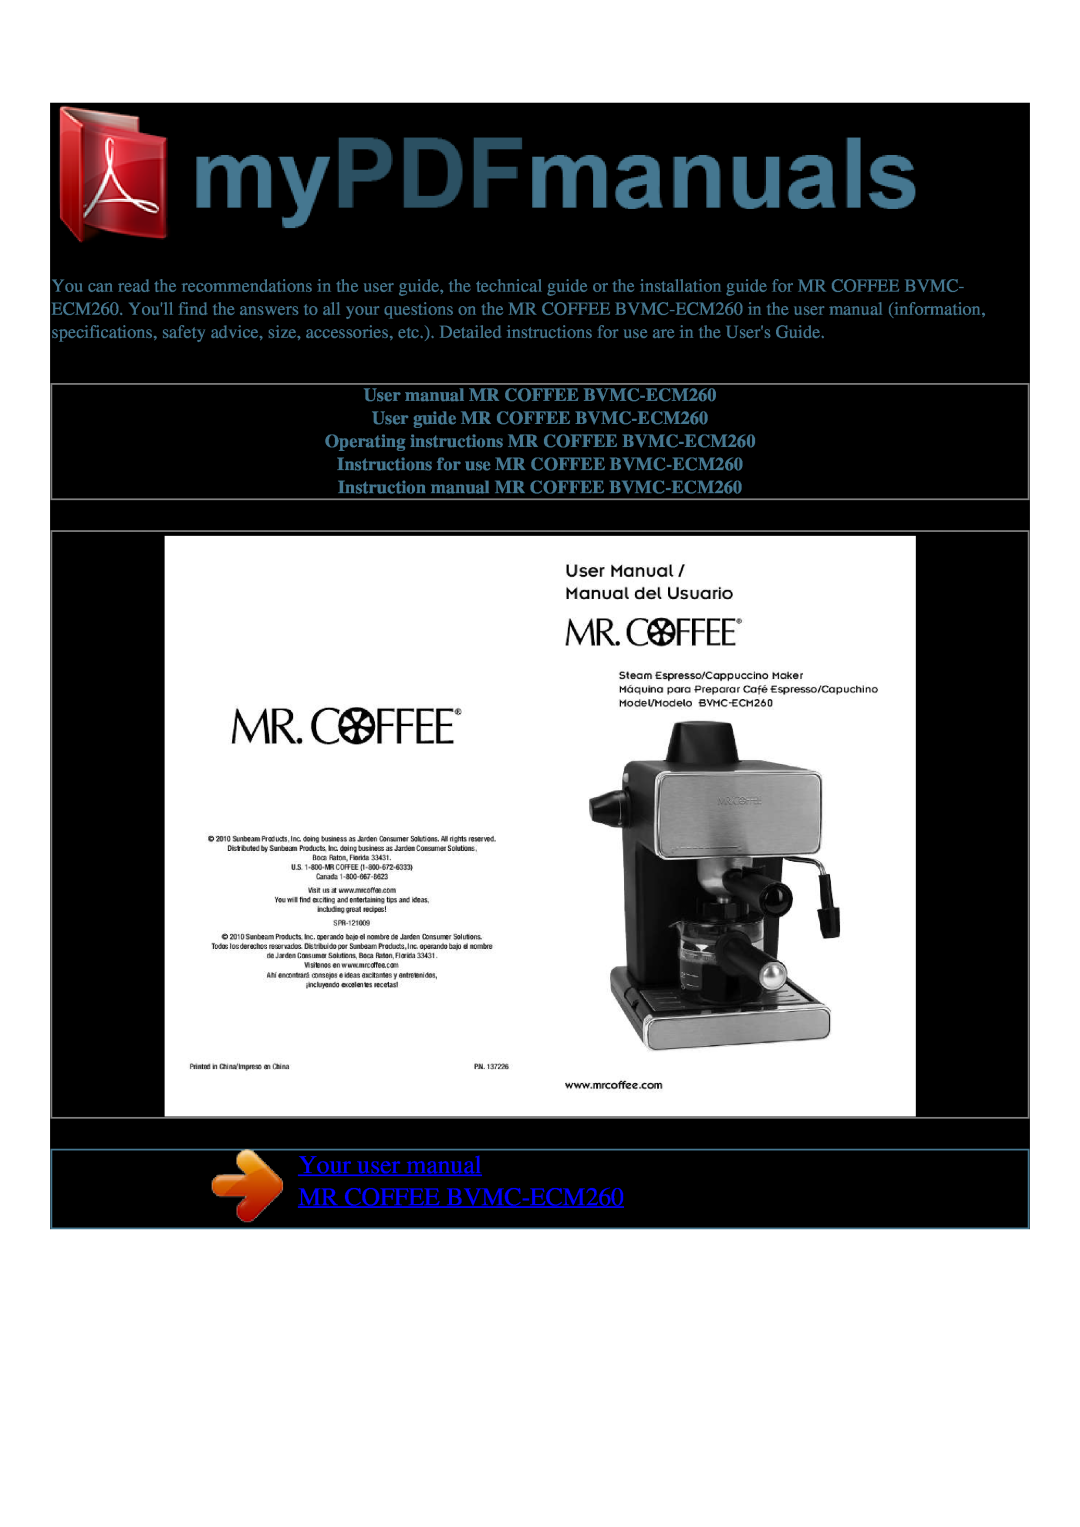 Mr. Coffee user manual User guide MR COFFEE BVMC-ECM260, Operating instructions MR COFFEE BVMC-ECM260 